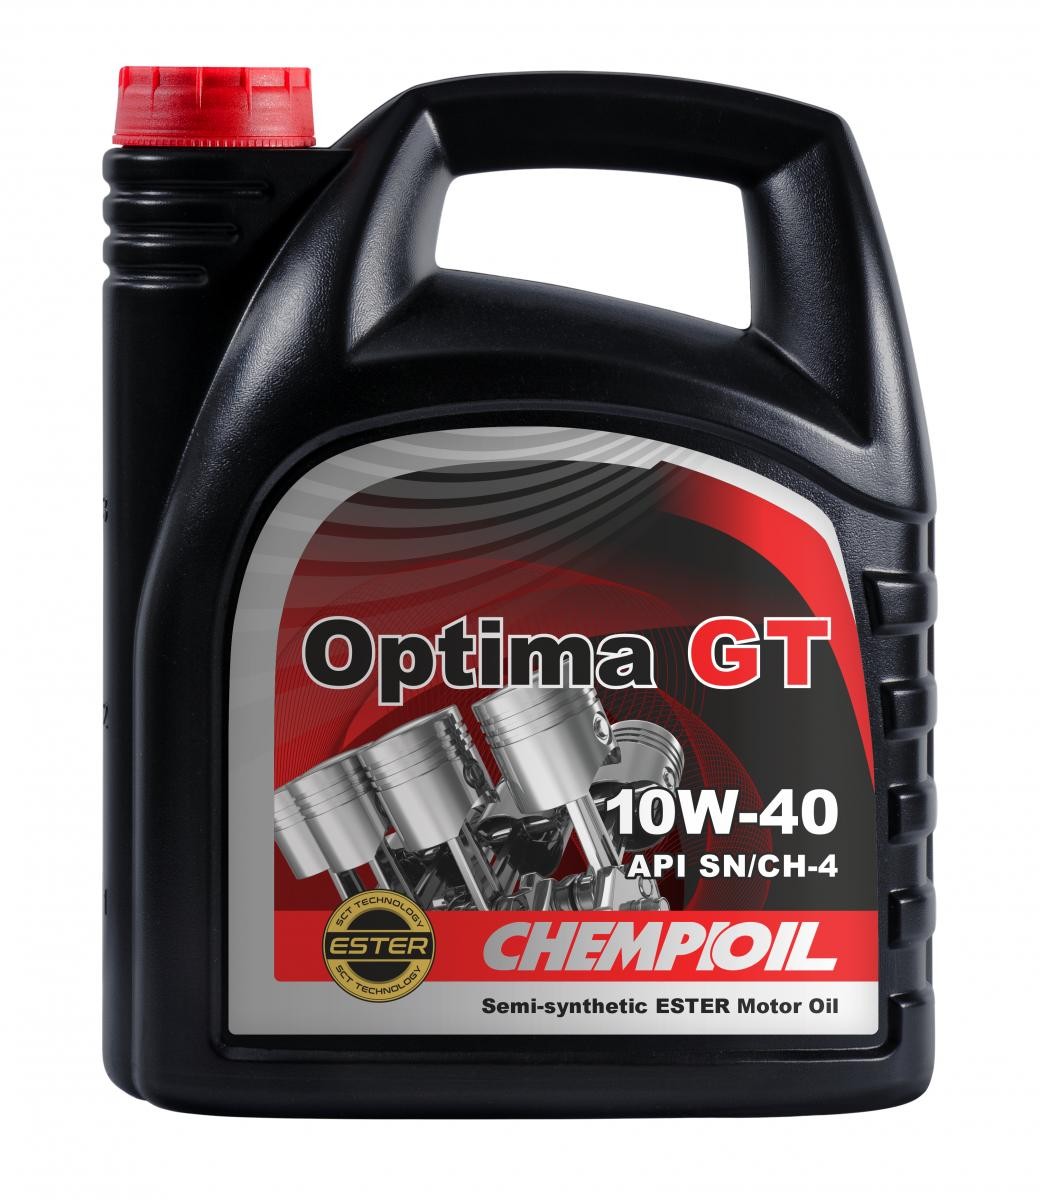 CH9501-4 CHEMPIOIL Optima, GT 10W-40, 4l, Teilsynthetiköl Motoröl CH9501-4 günstig kaufen